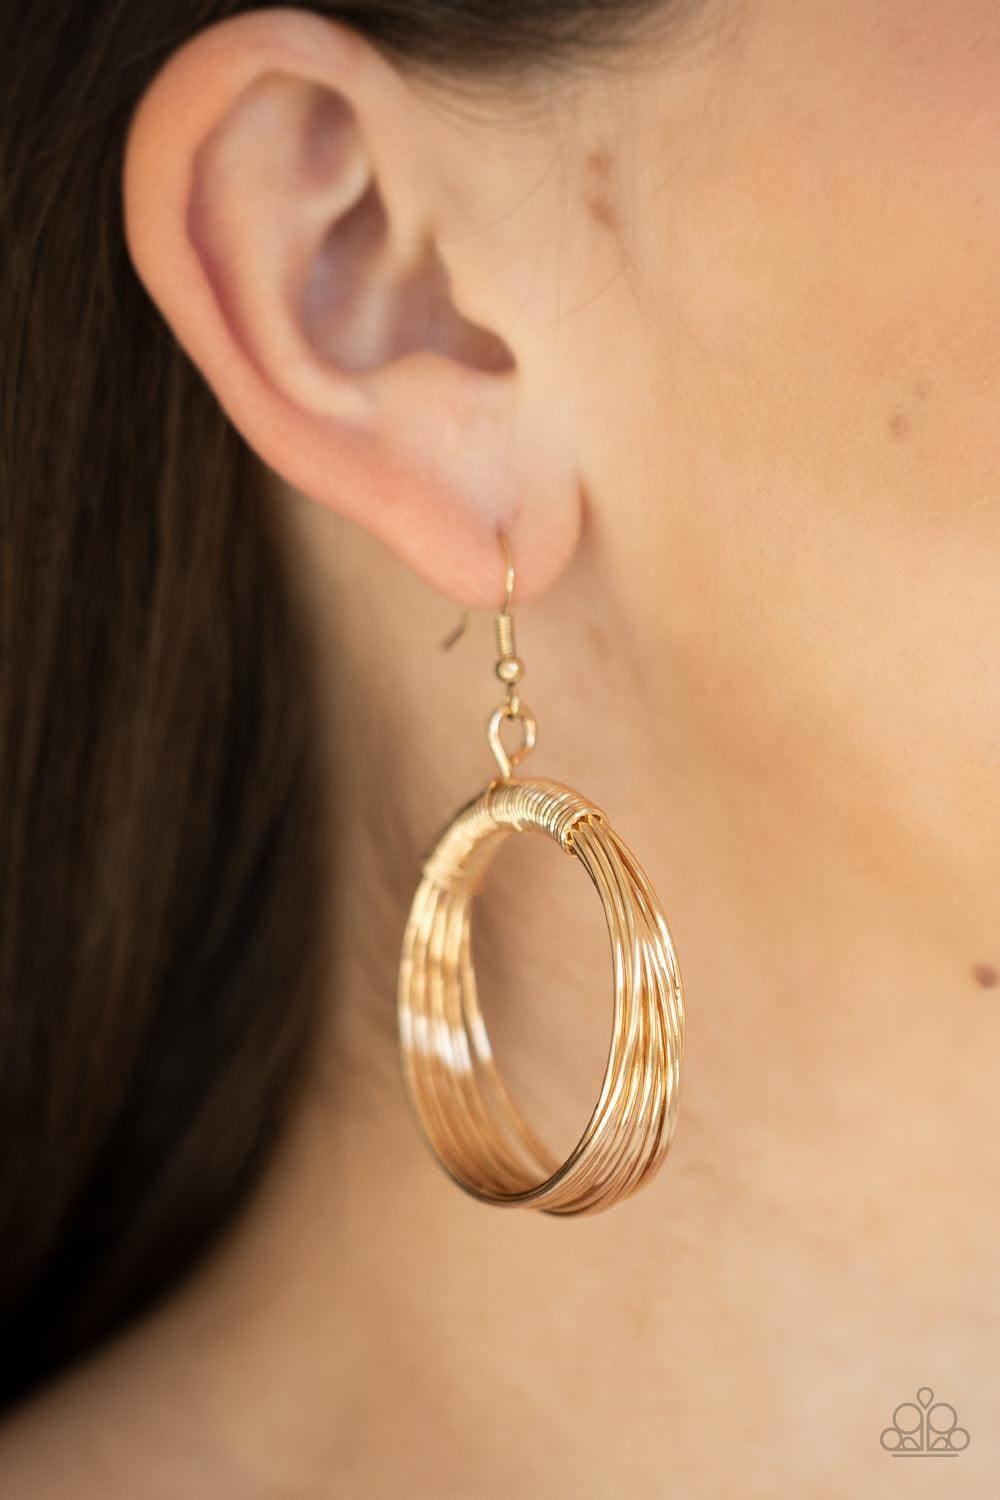 Paparazzi Accessories - Urban-spun - Gold Earrings - Bling by JessieK